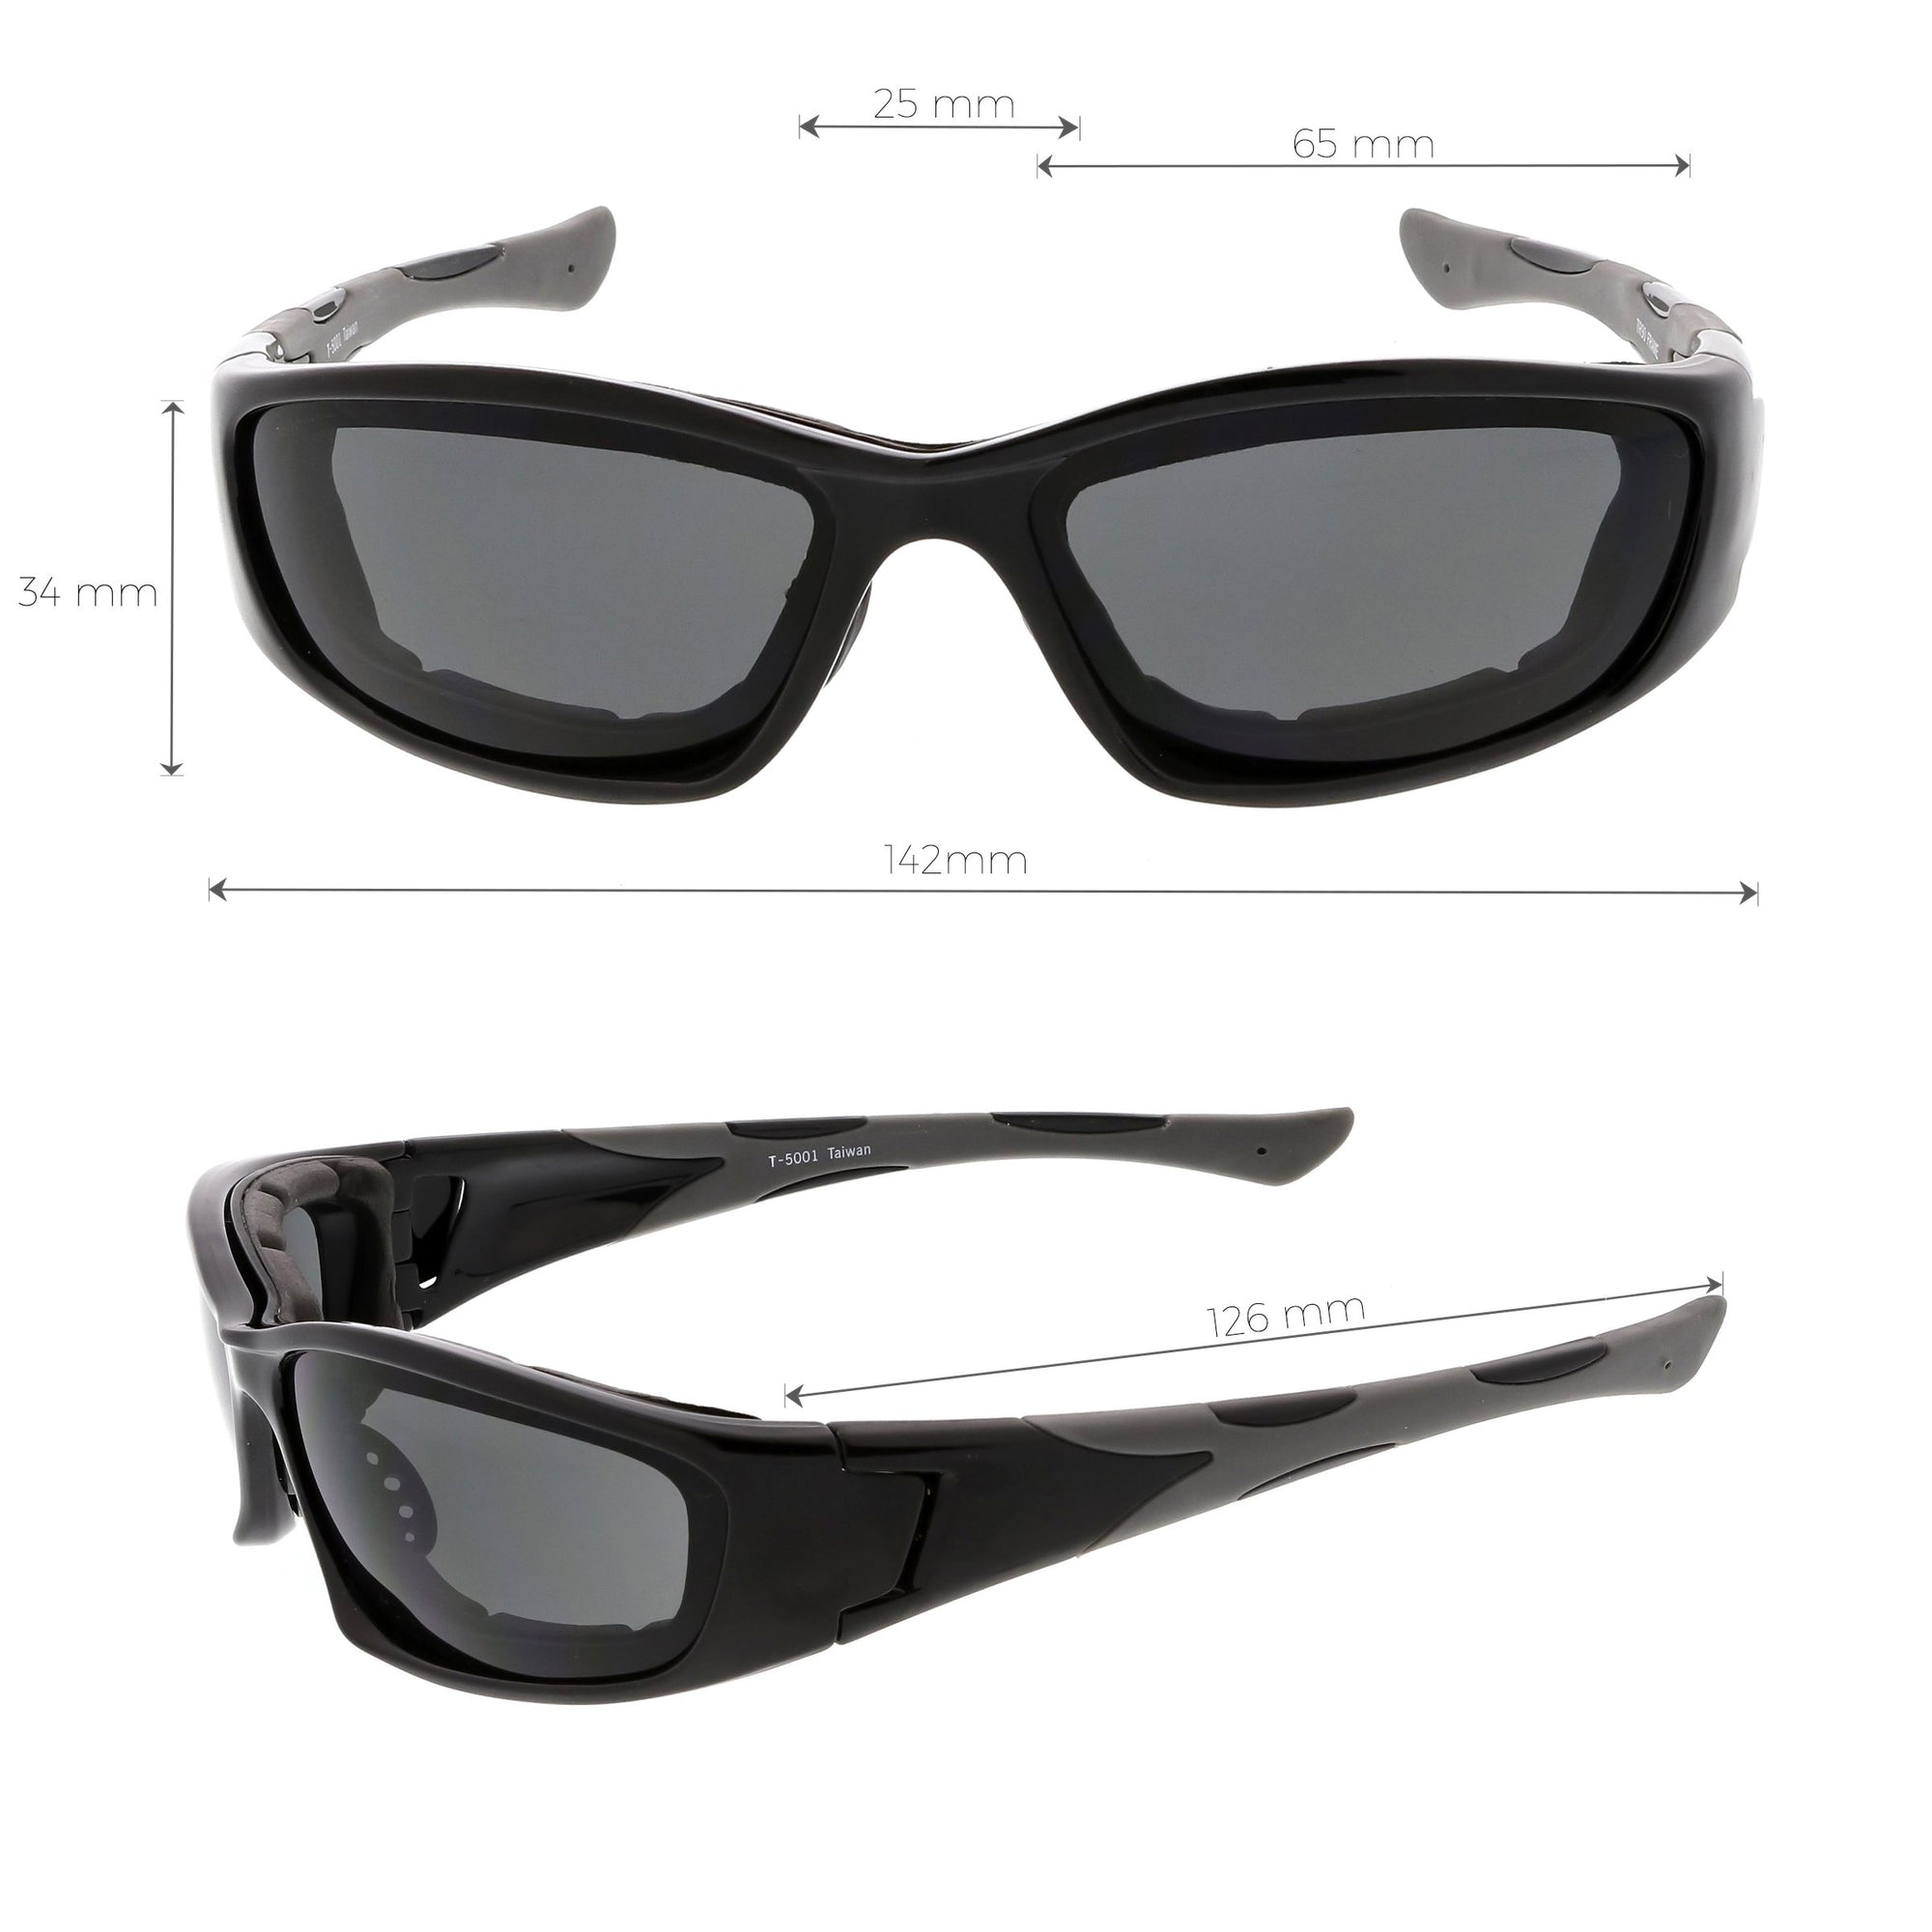 Men's Active Sports TR-90 Padded Goggle Sunglasses - zeroUV